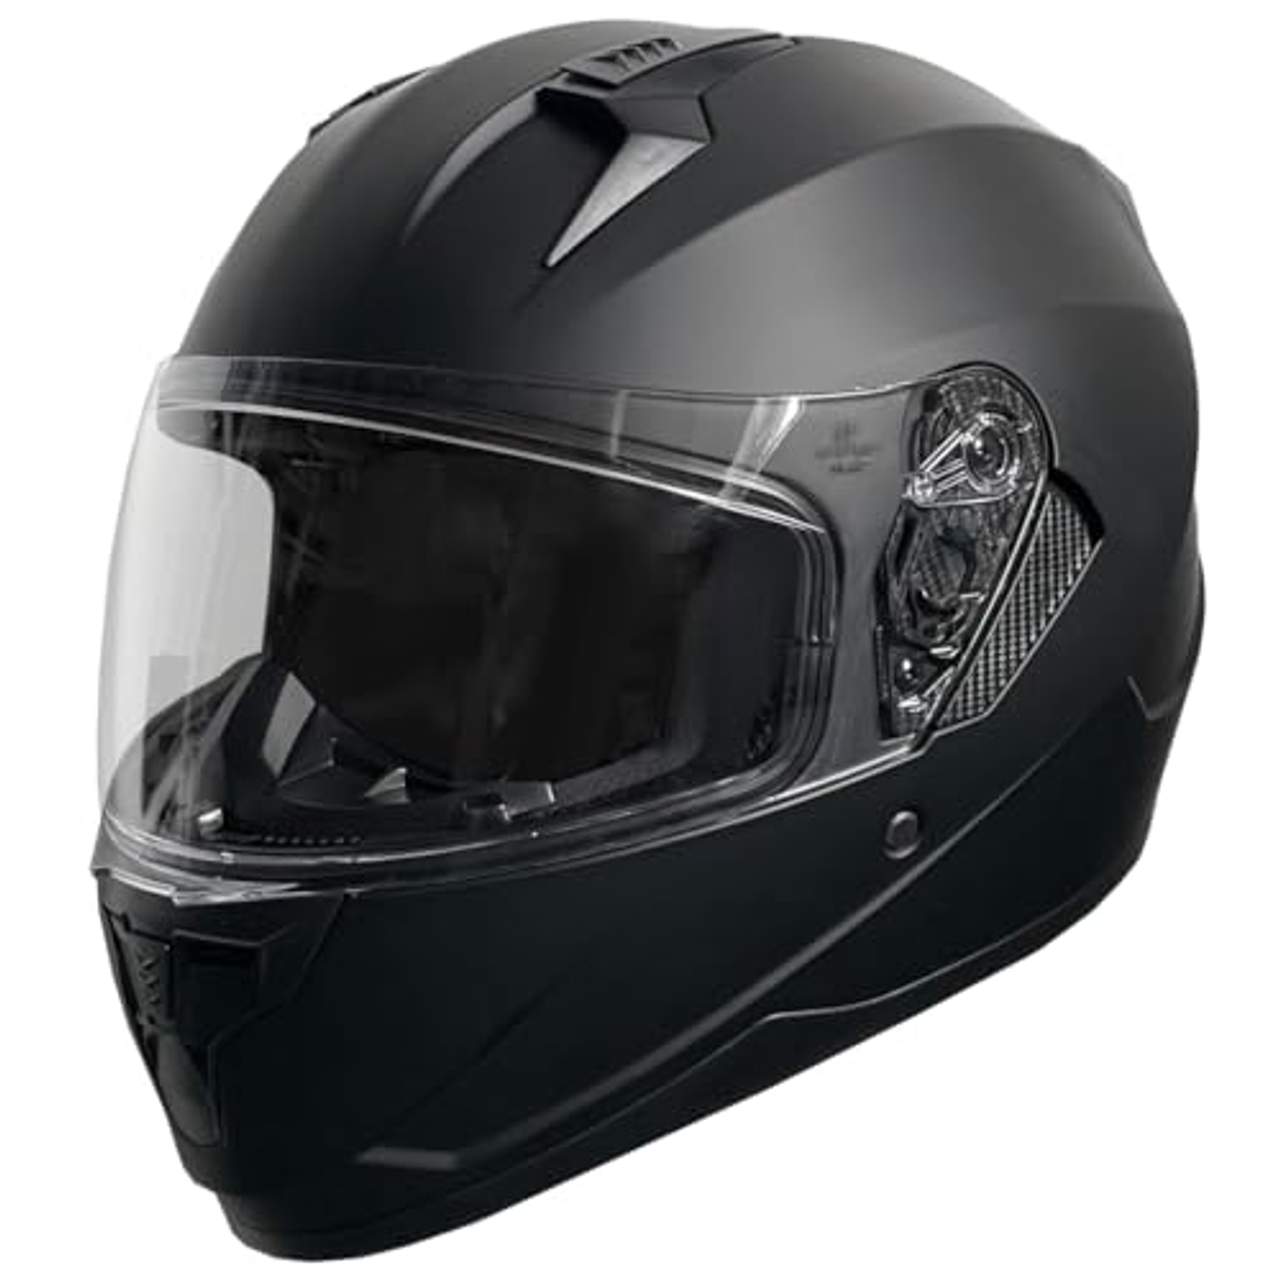 Rallox Helmets Integralhelm 051-1 schwarz